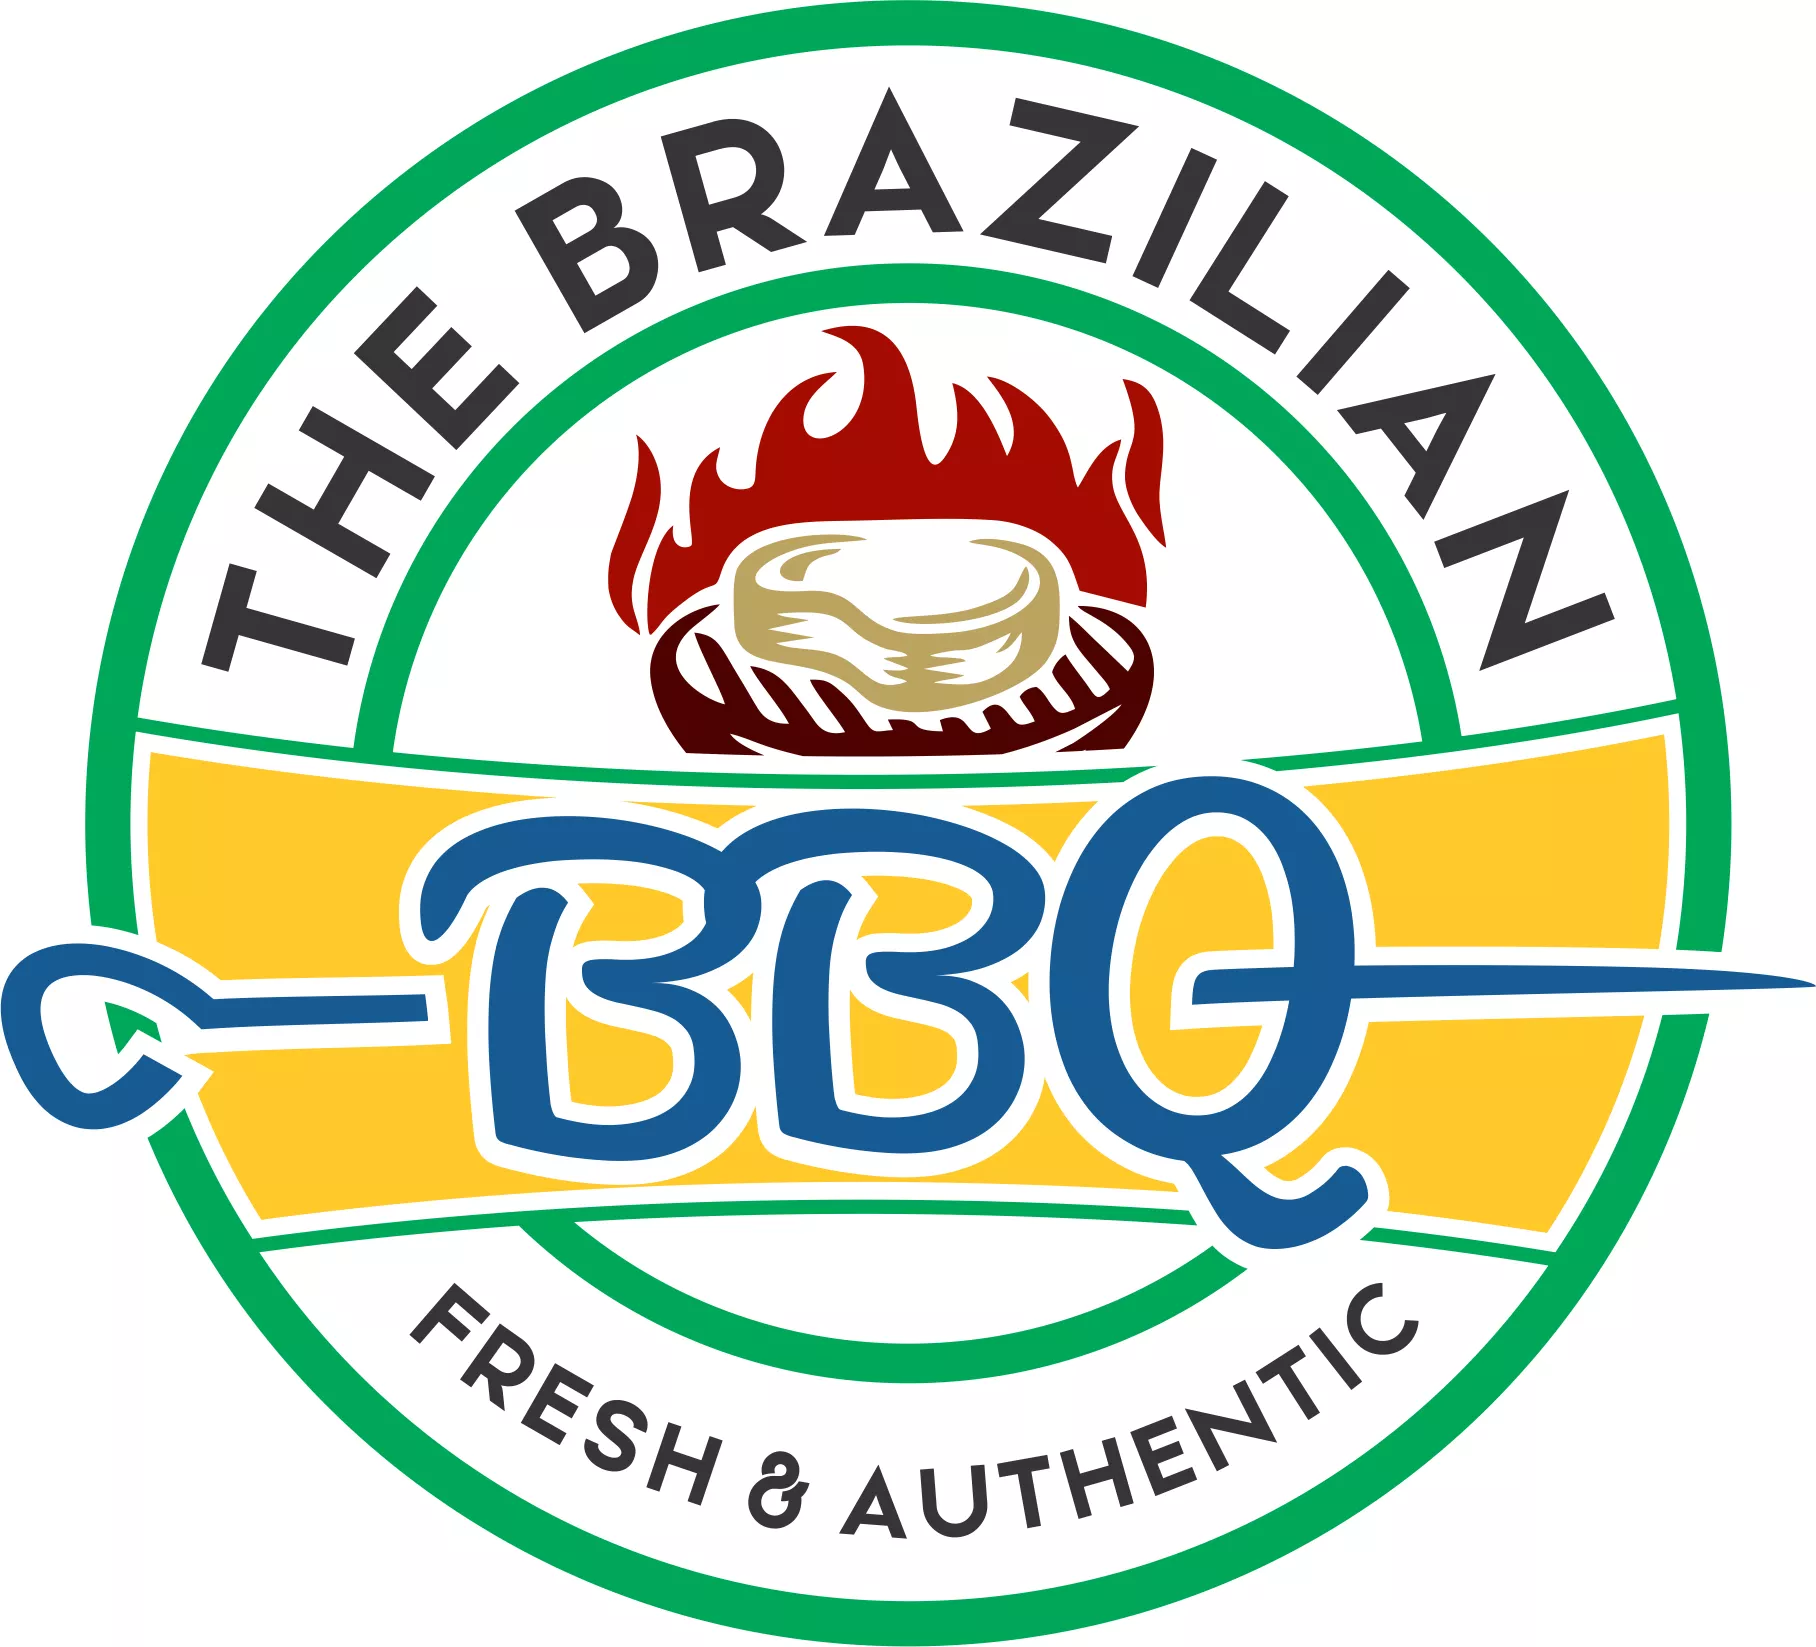 The Brazilian BBQ Philadelphia